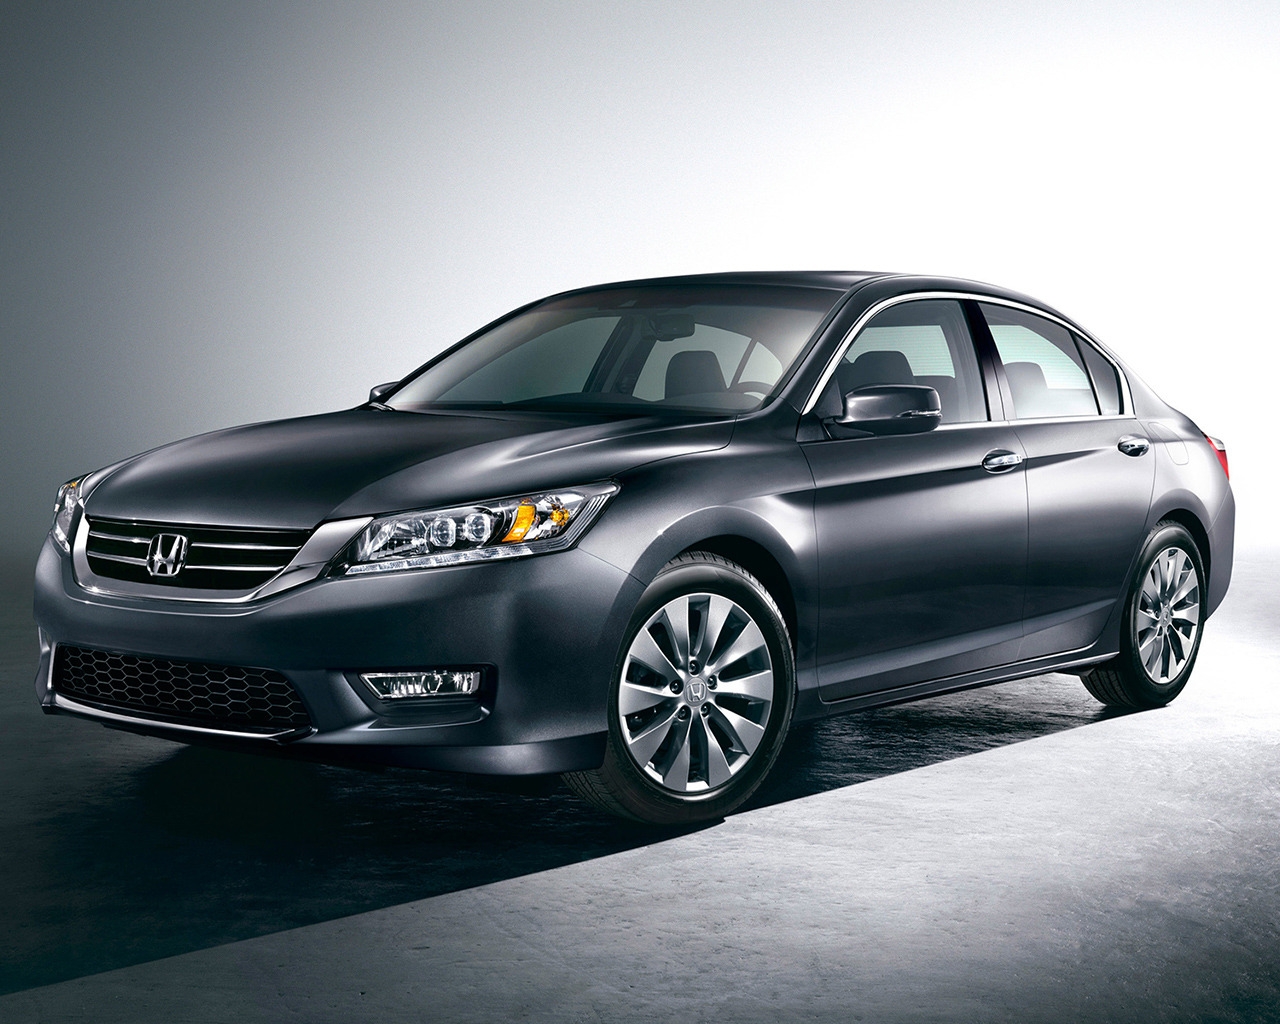 2013 Honda Accord for 1280 x 1024 resolution